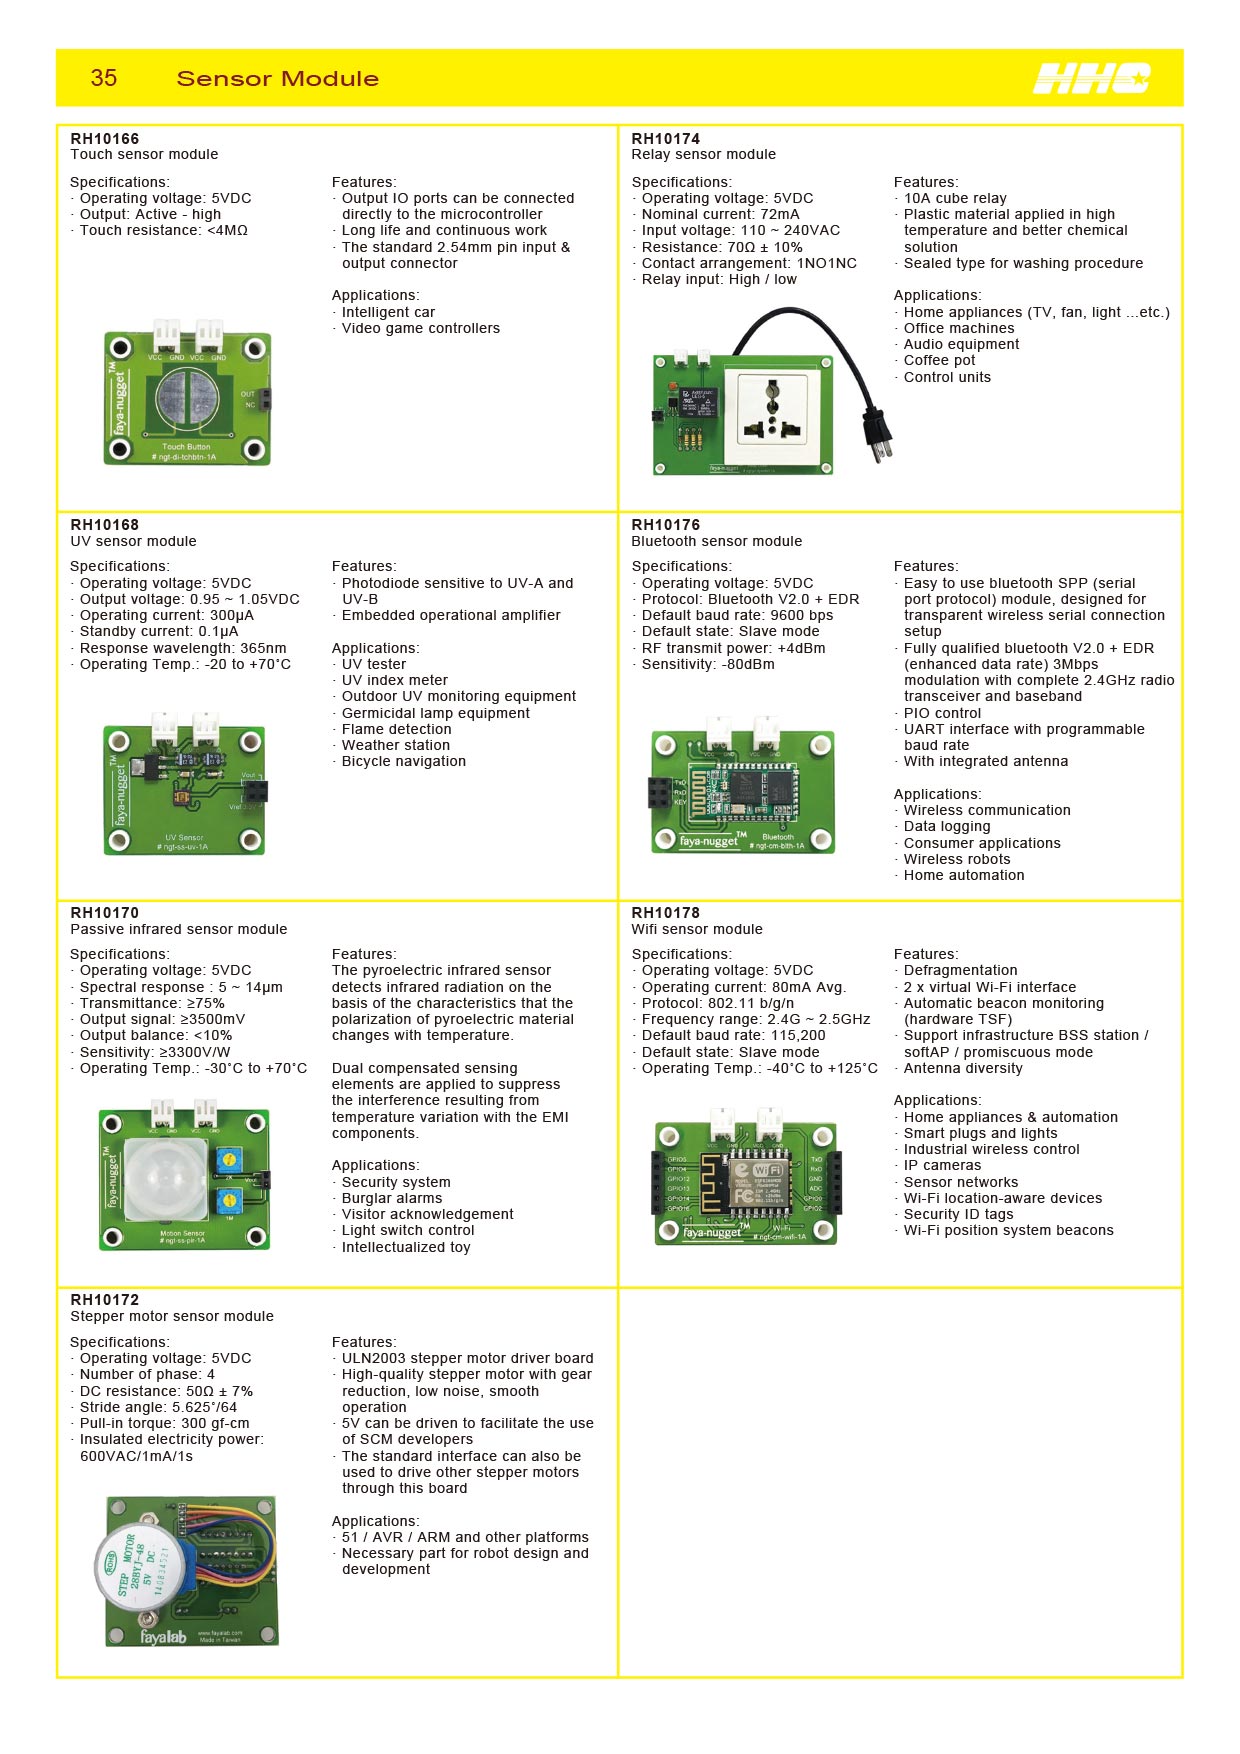 Shallin Electronics | Quality Electronic Components